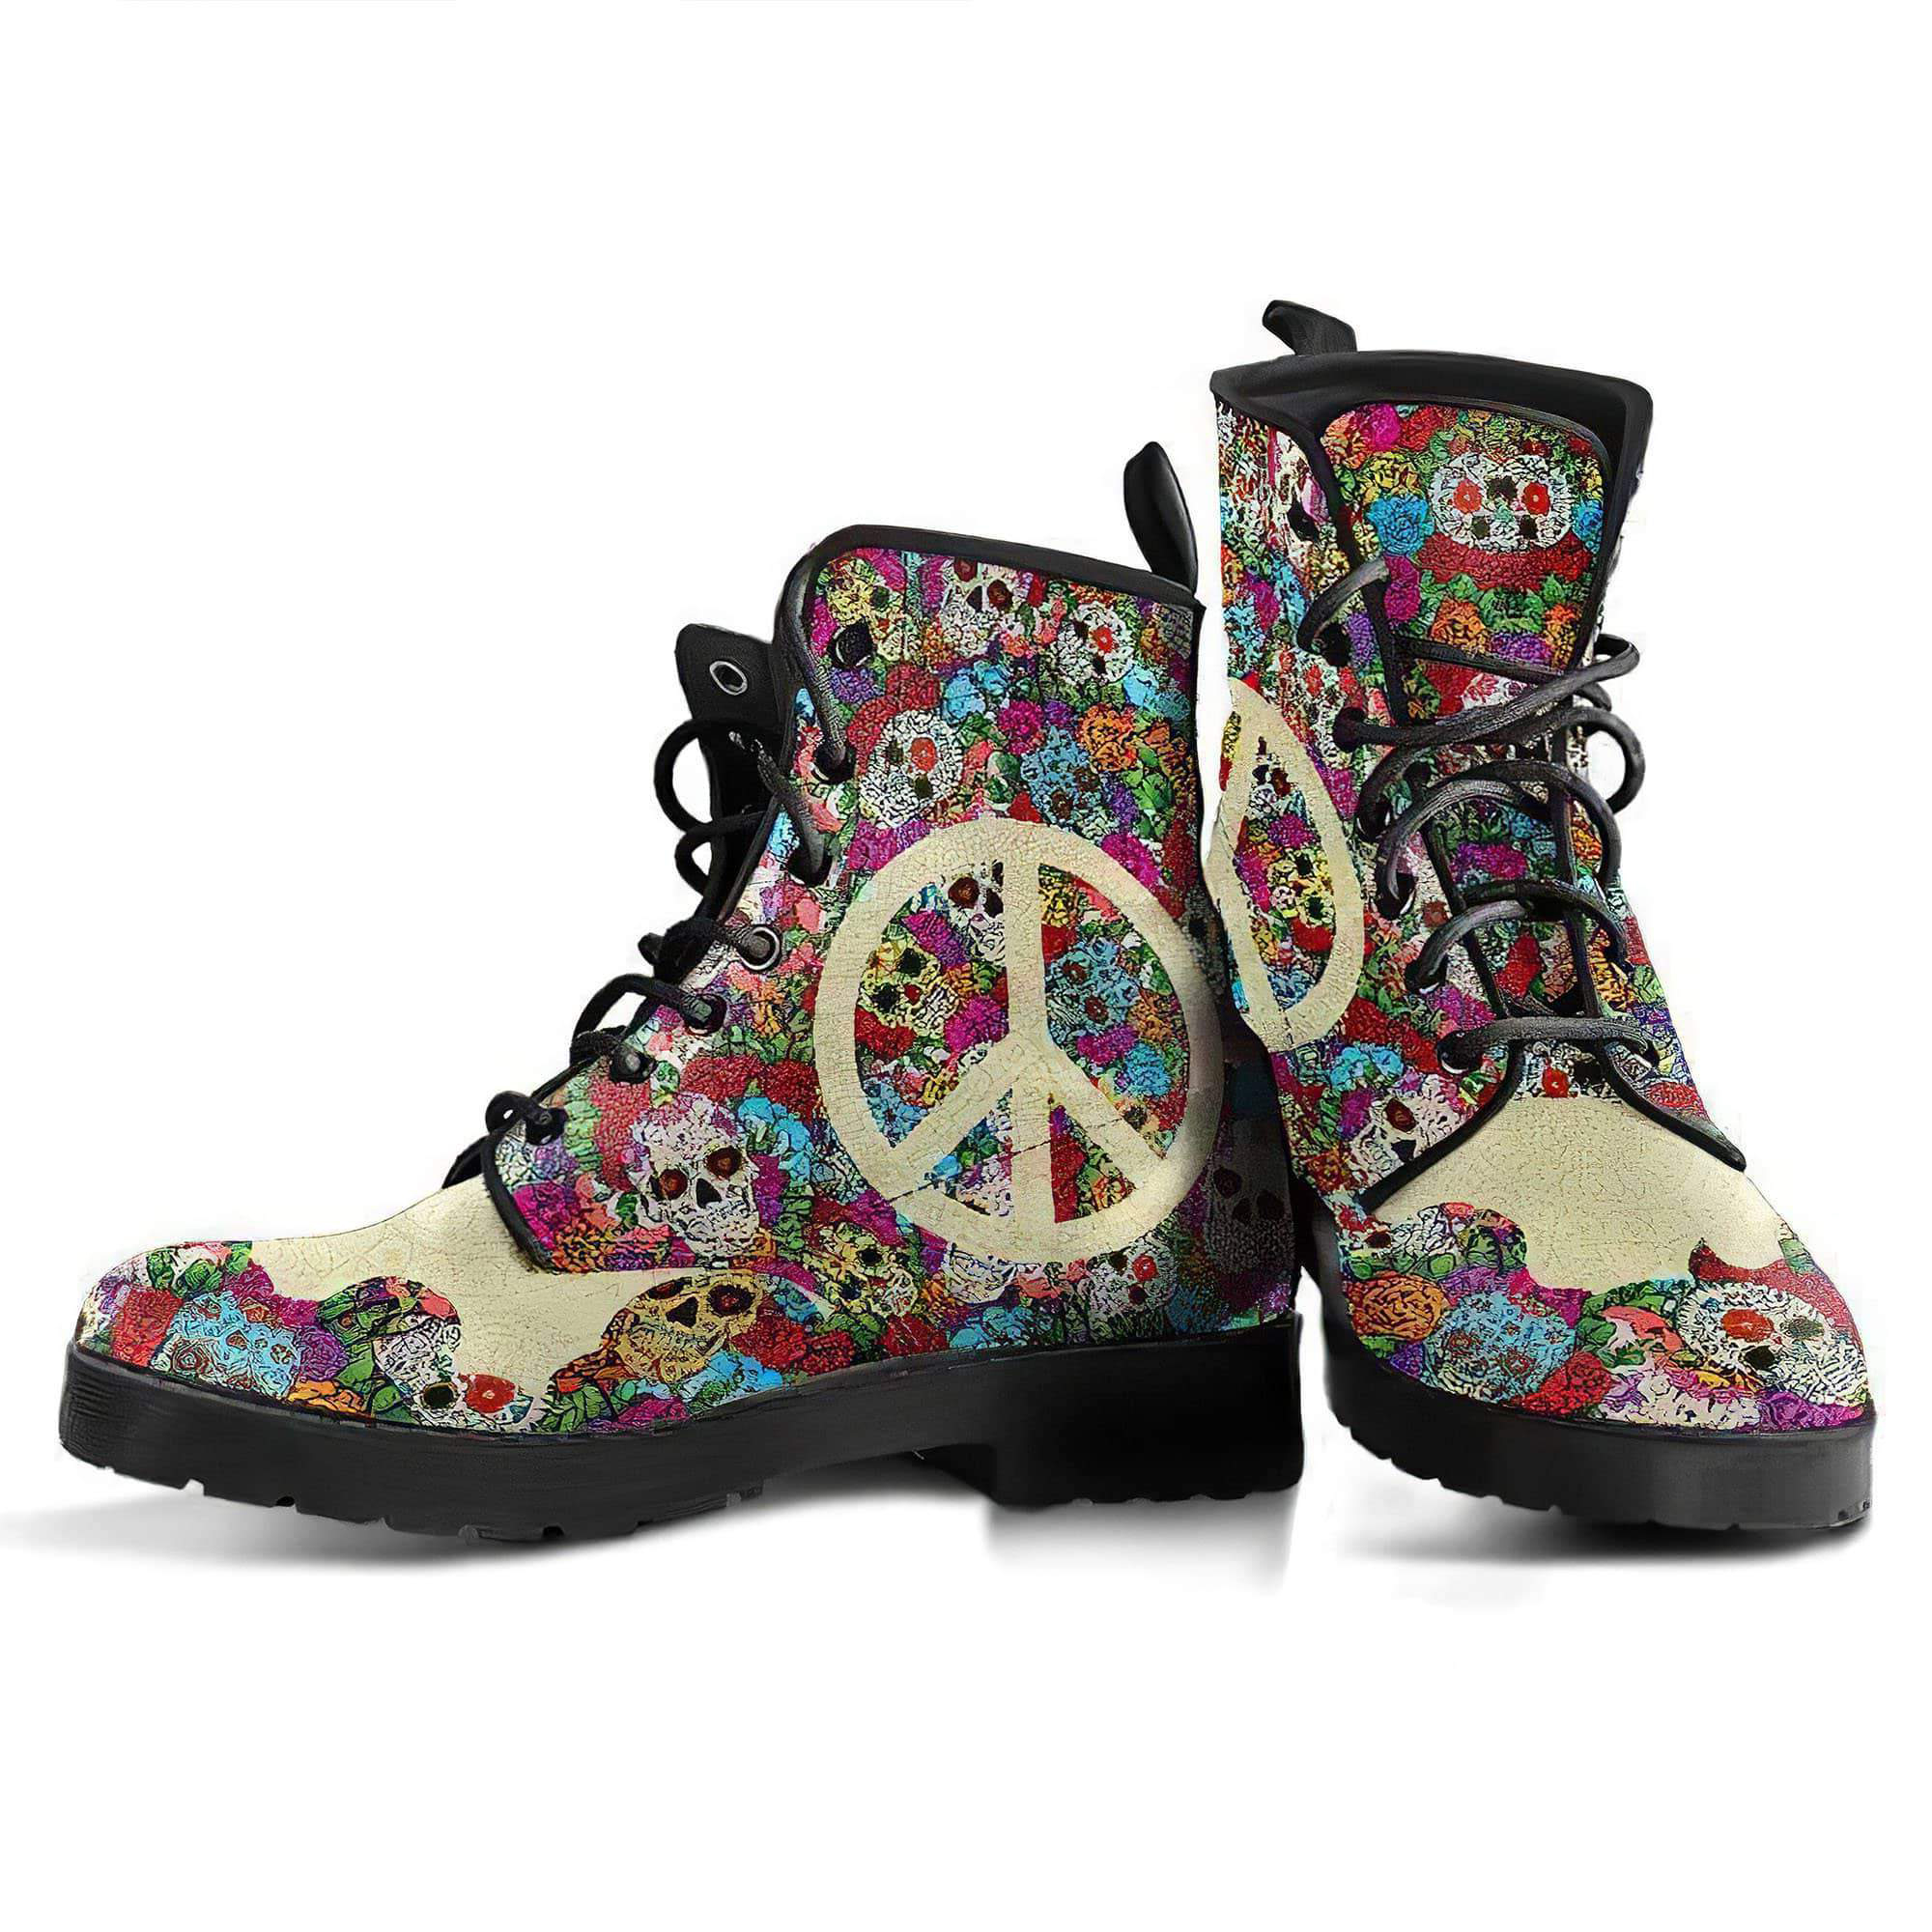 skull-peace-v3-women-s-boots-vegan-friendly-leather-women-s-leather-boots-12051949551677.jpg